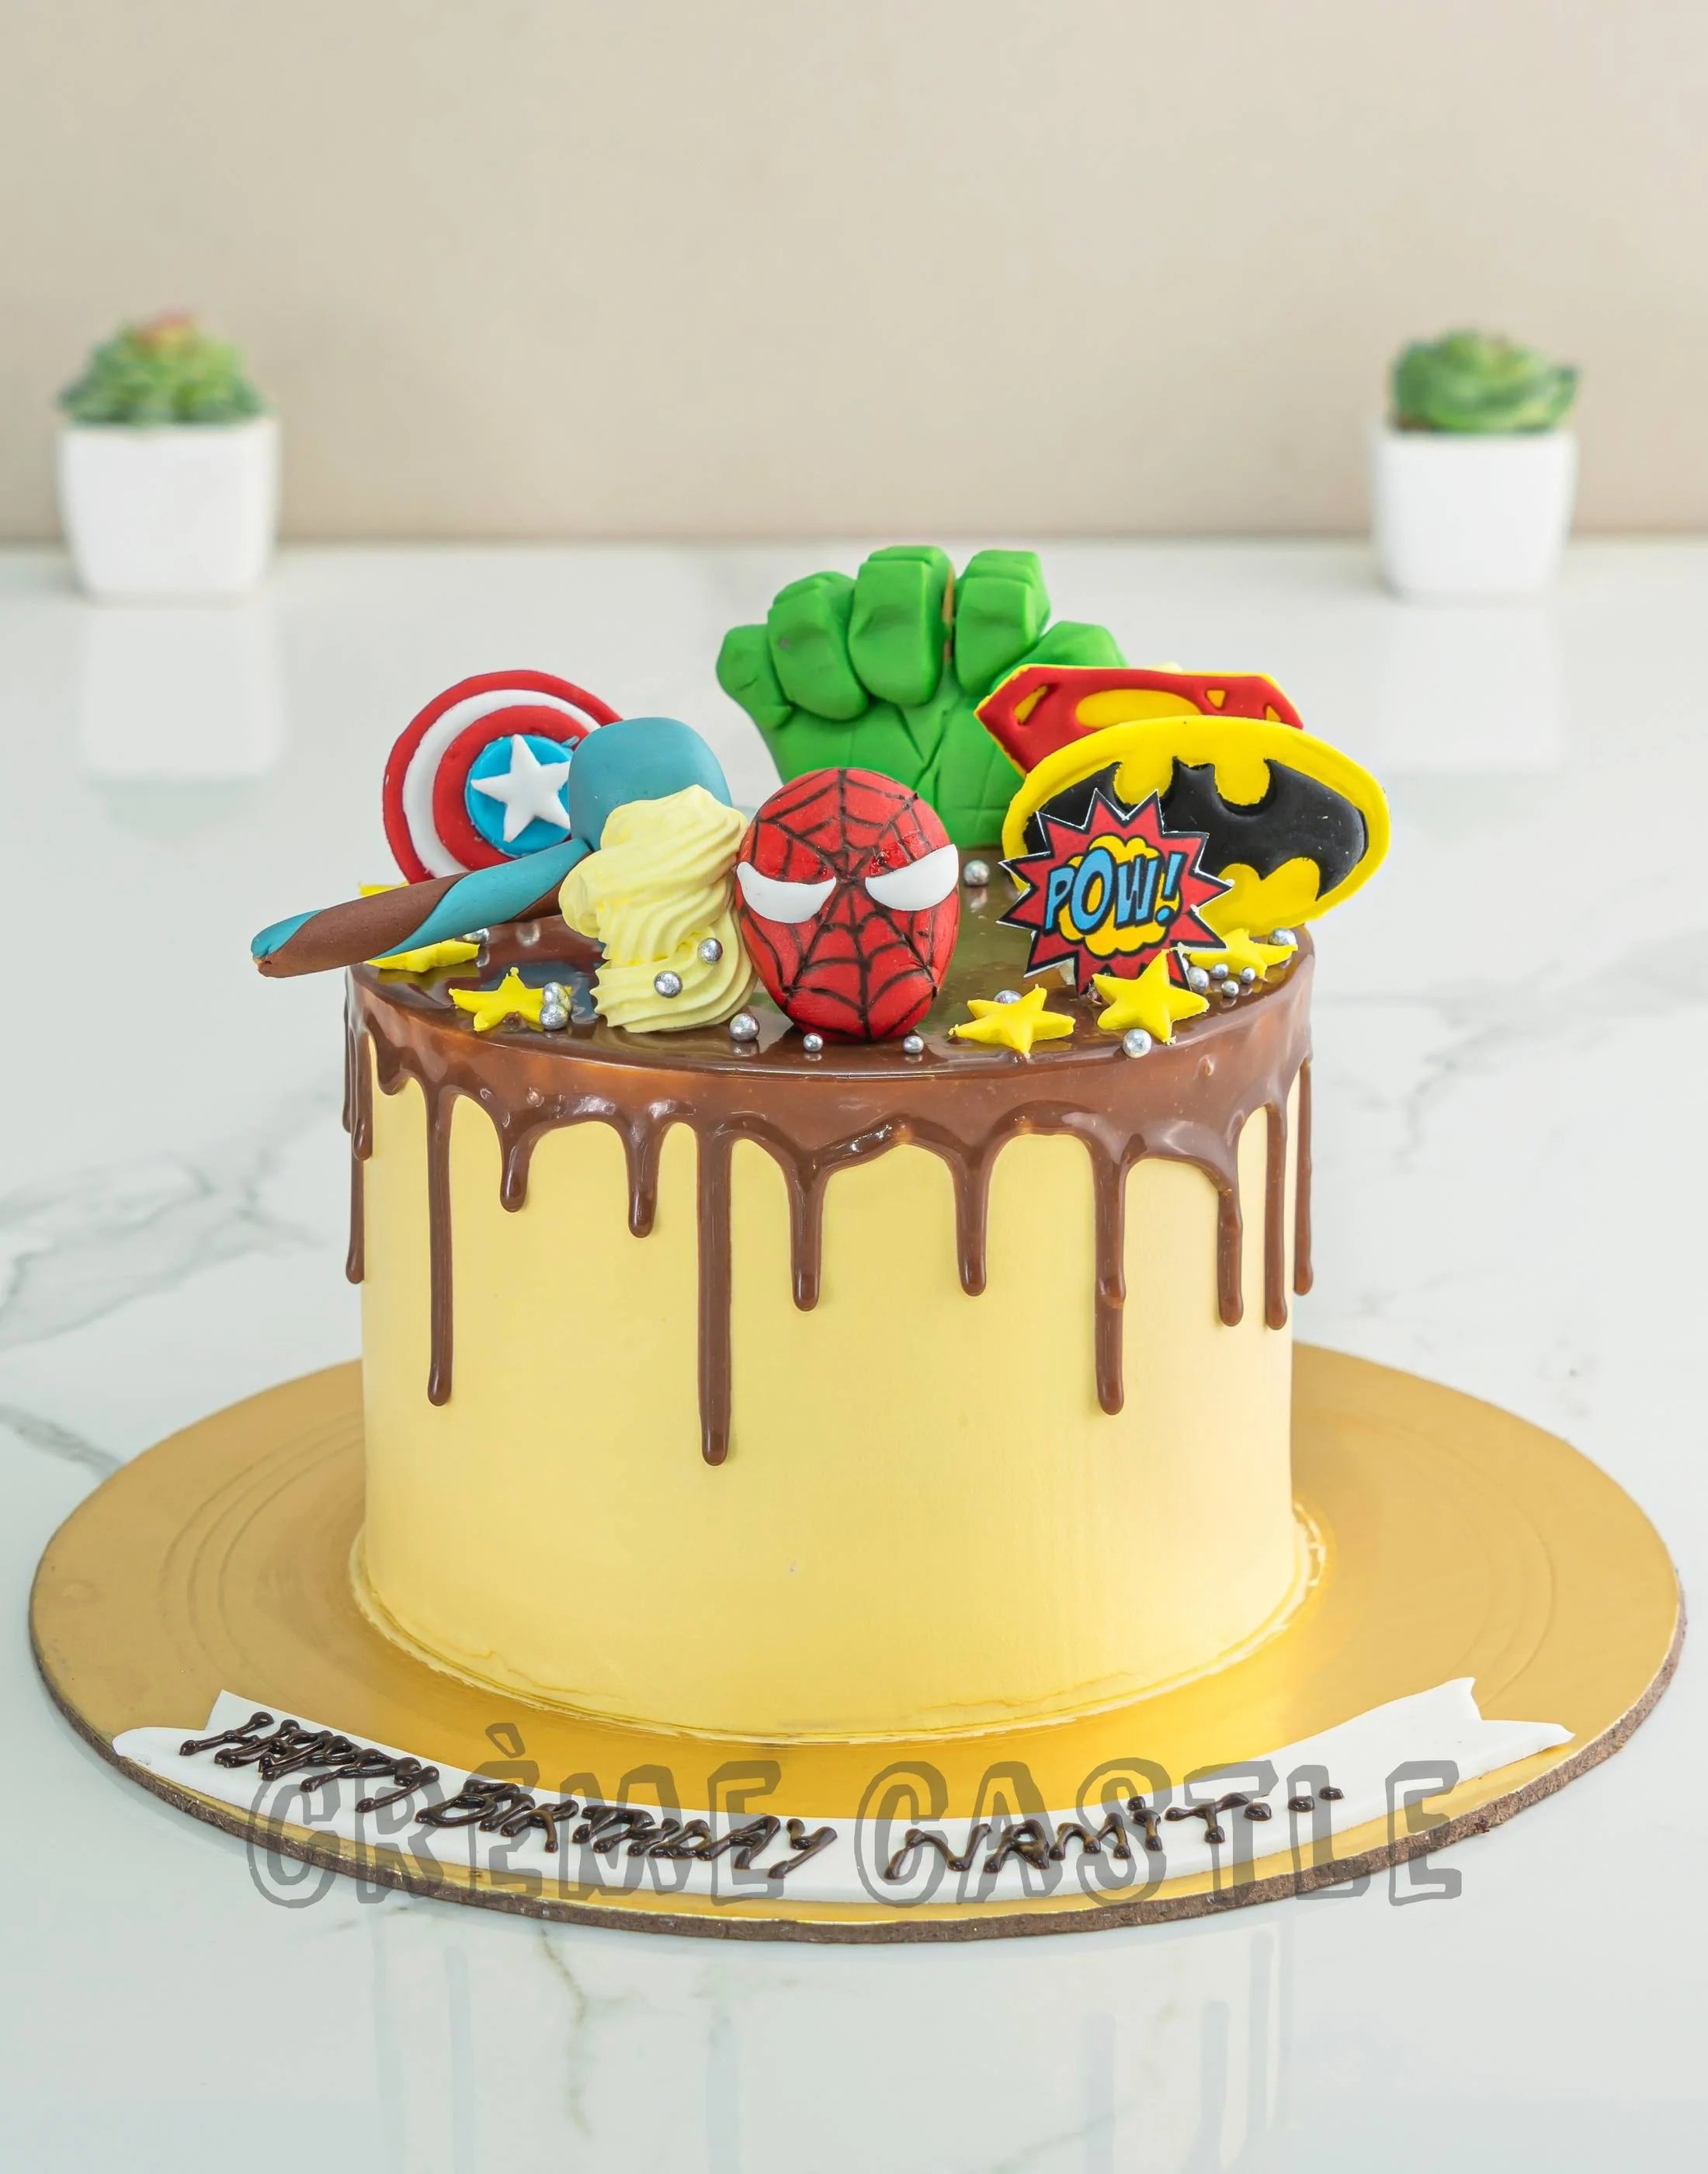 Superhero themed cake - The Cake Parade ~ Oswestry | Facebook